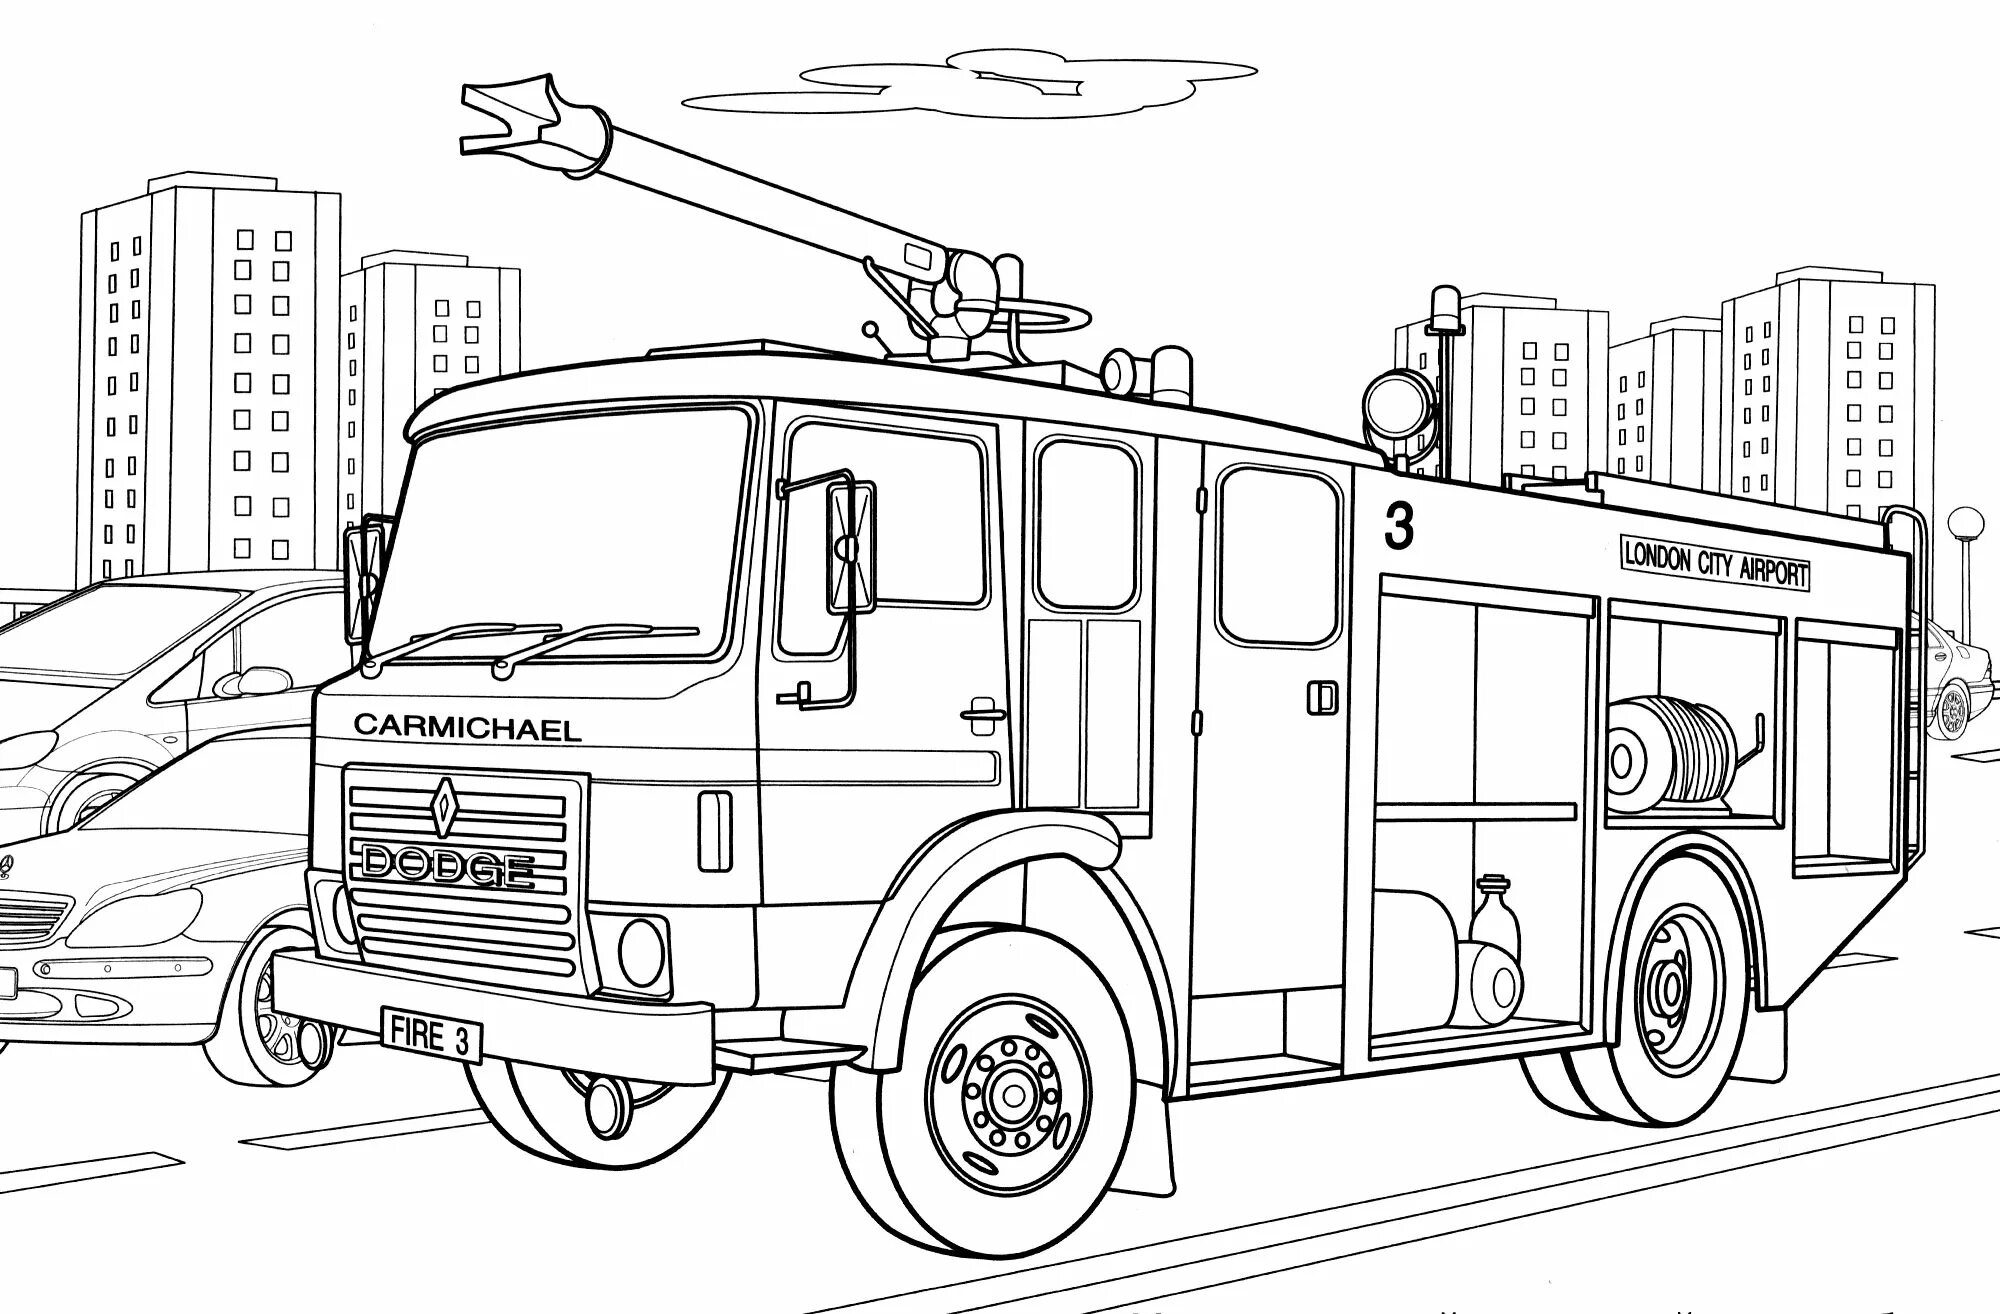 Раскраски про машинки. Раскраска пожарная машина. Пожарная машина раскраска для детей. Пожарная машина раскраска для малышей. Раскраски для мальчиков пожарная машина.